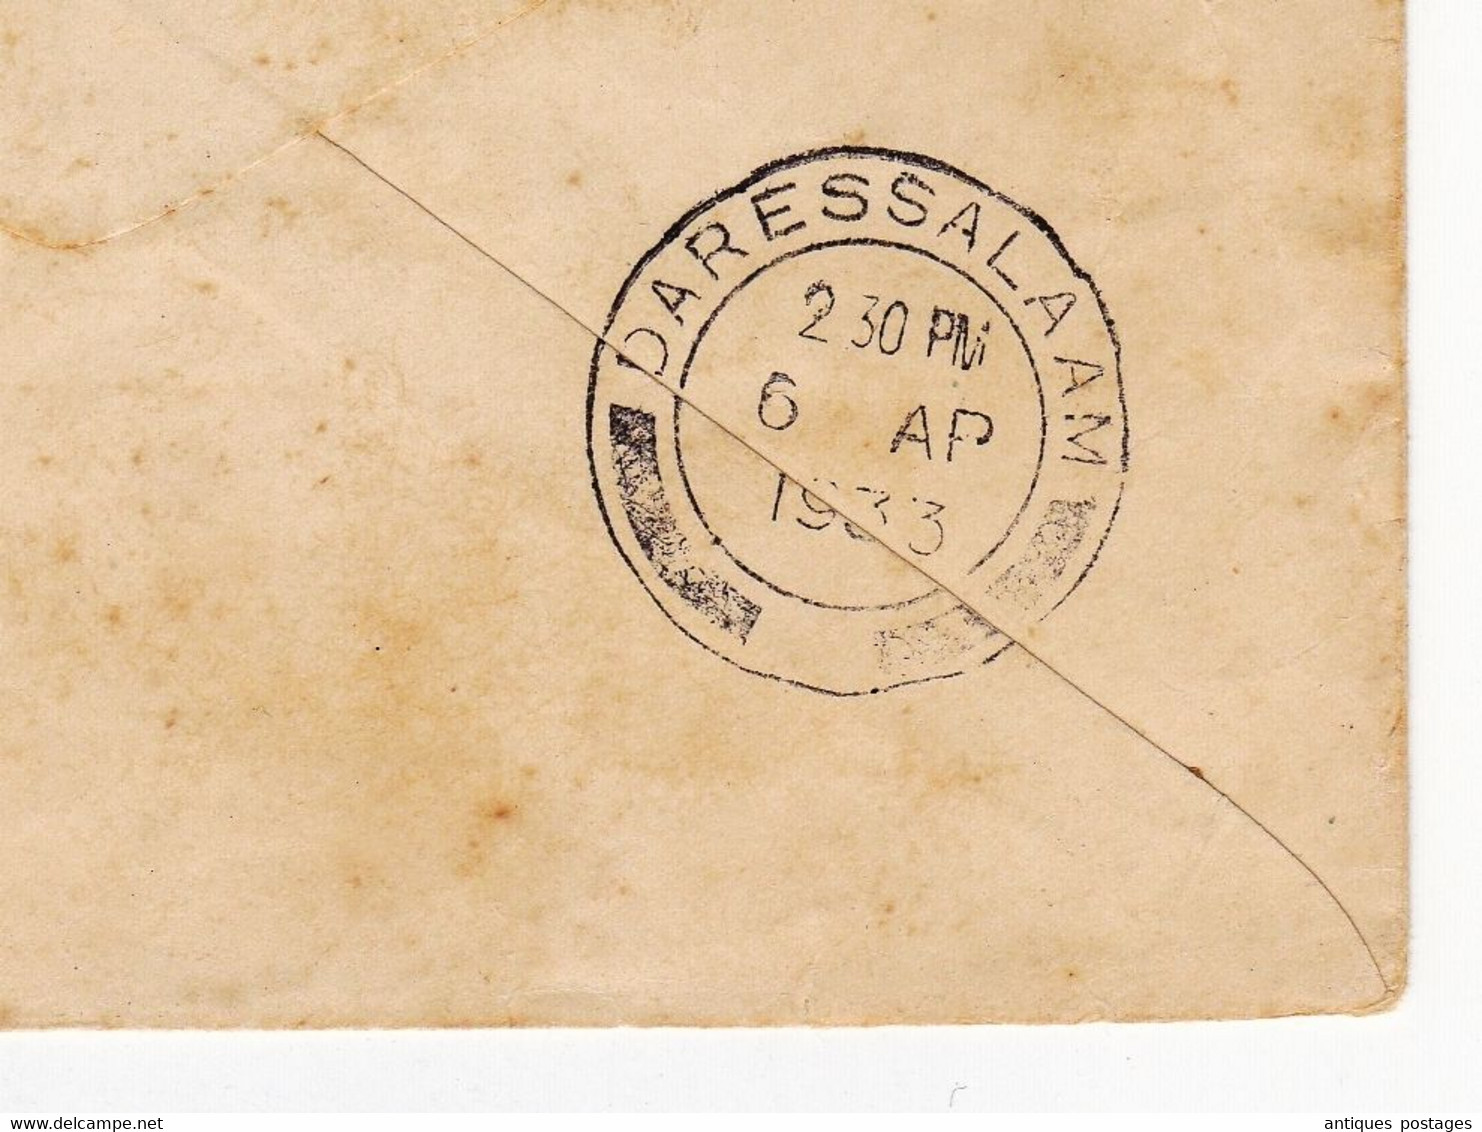 Lettre 1933 Mombasa Kenya Dar es Salaam Tanzania Air Mail British Colony Africa George V